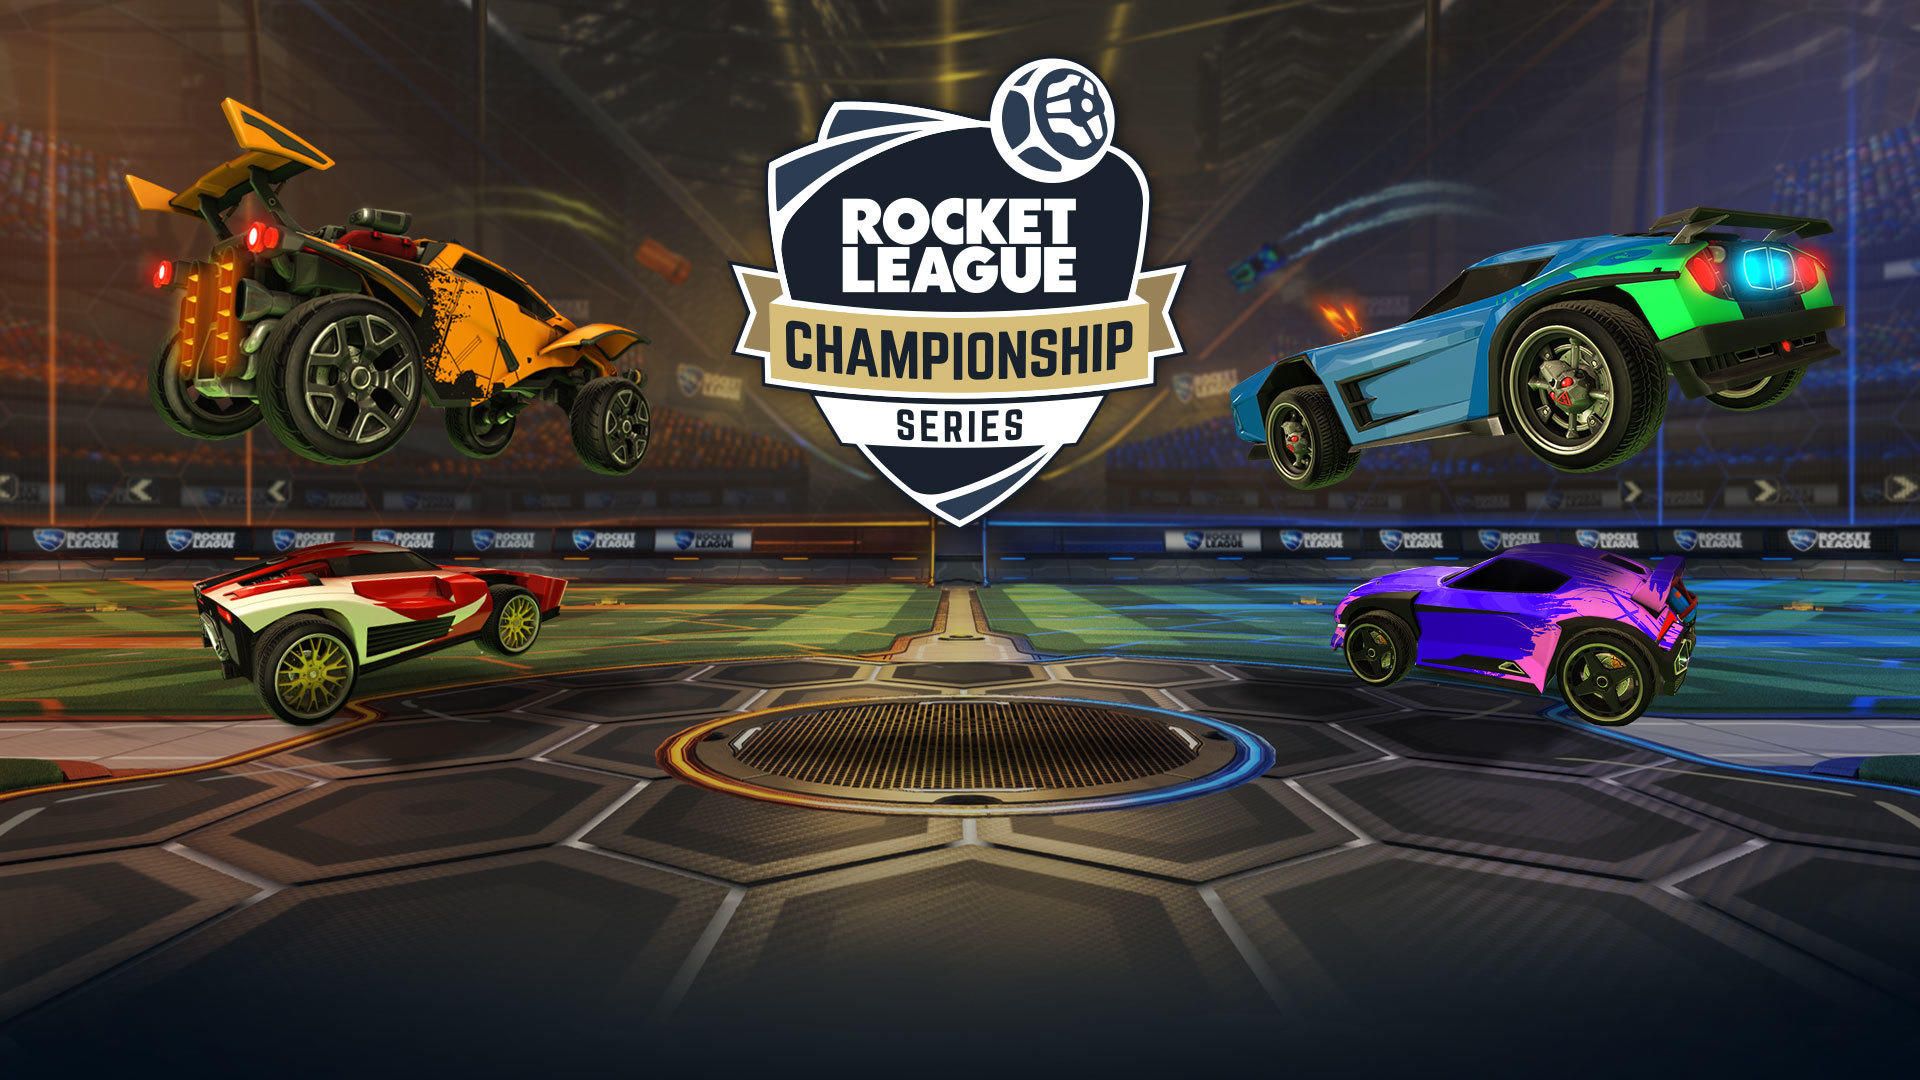 Introducing the Rocket League Championship Series. Rocket League